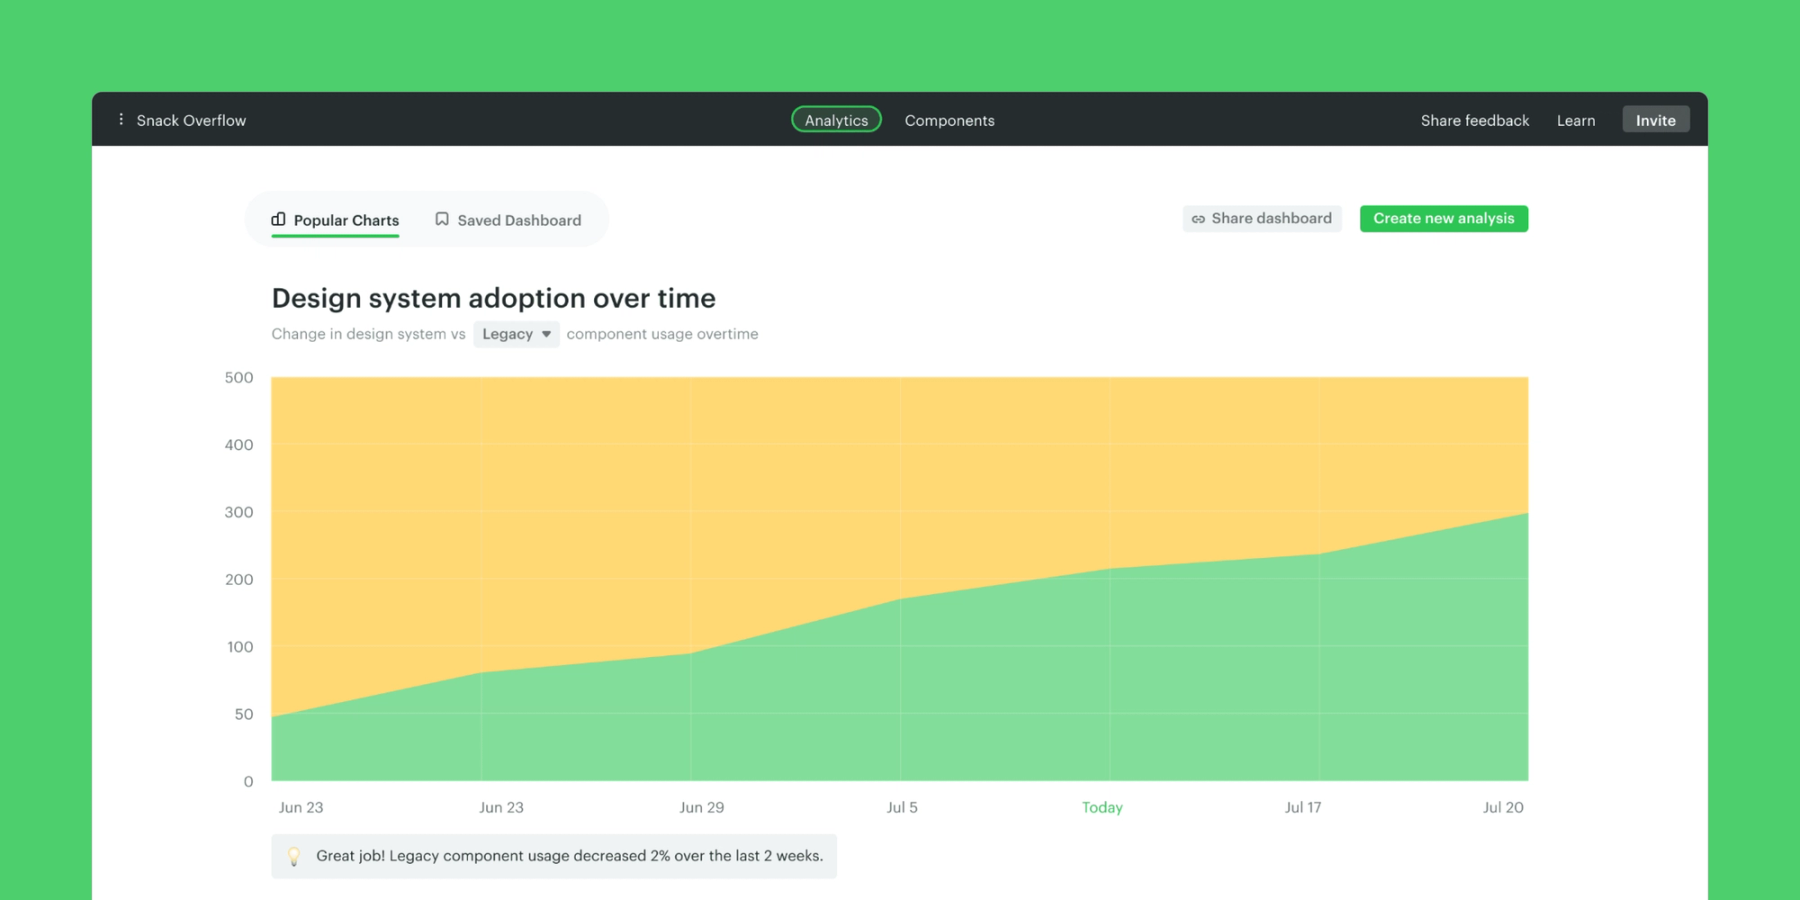 Omlet chart showing design system adoption over time